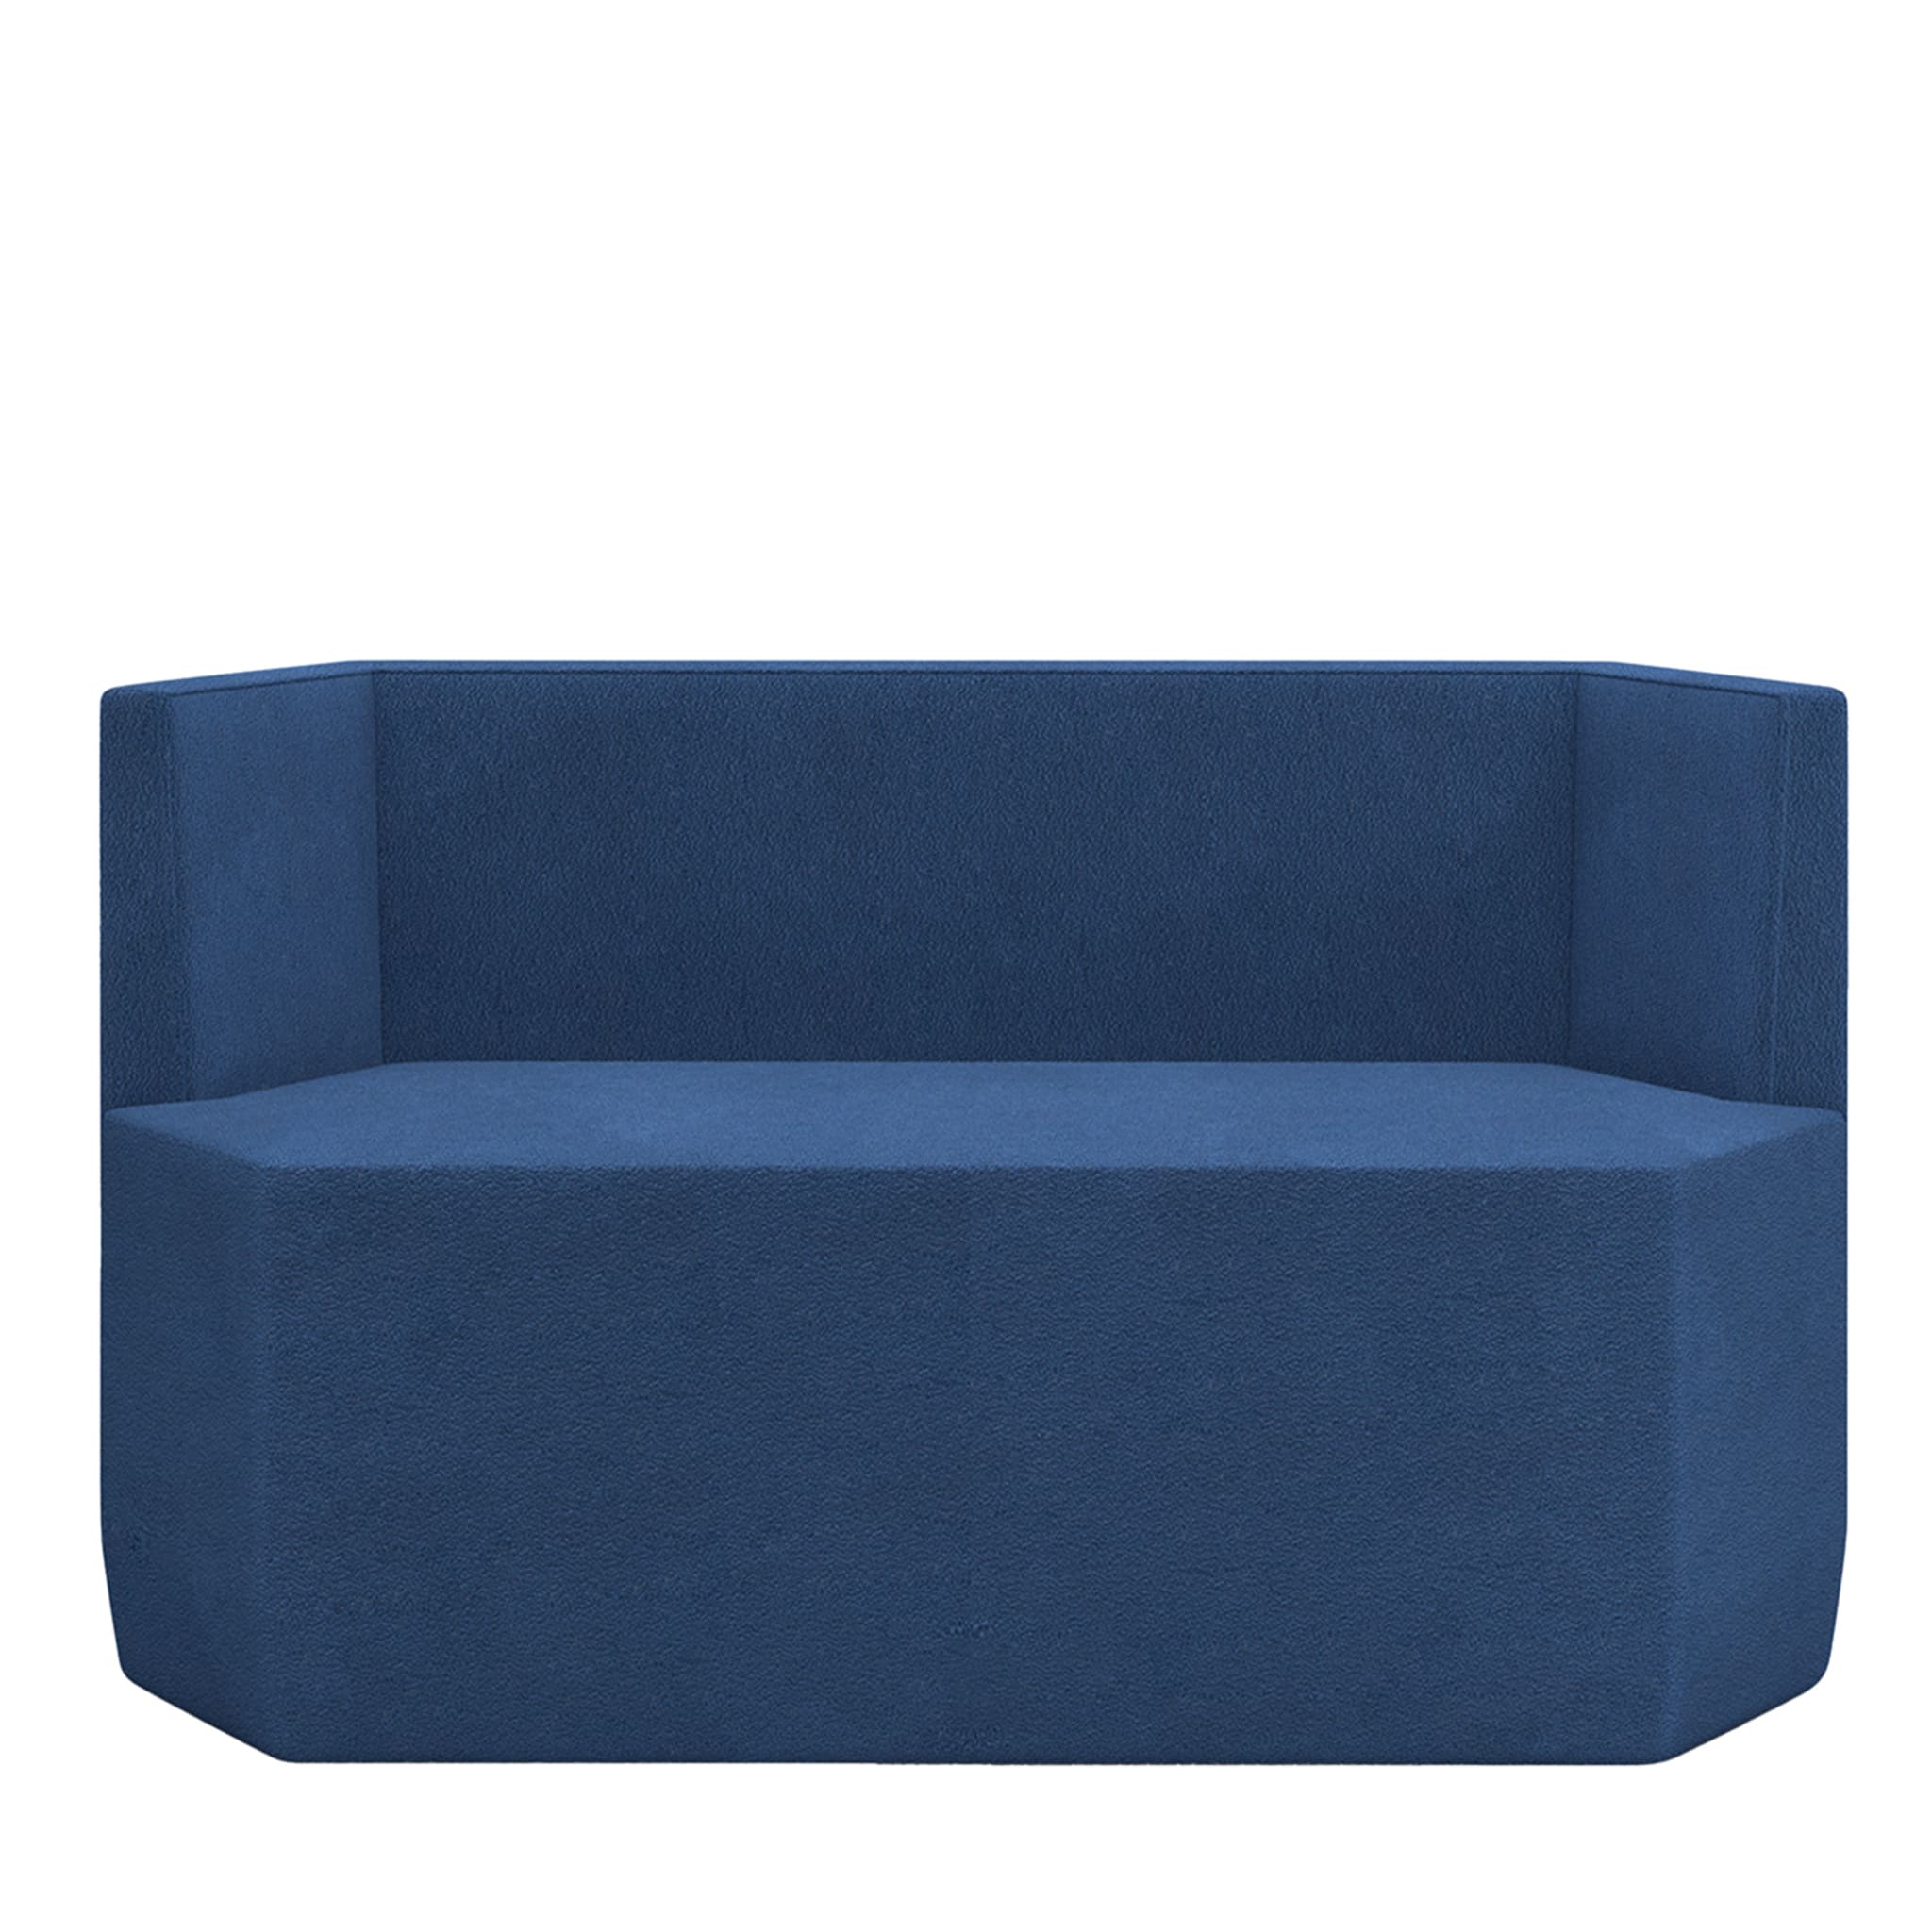 Tigram Low Blue Sofa by Italo Pertichini  - Main view